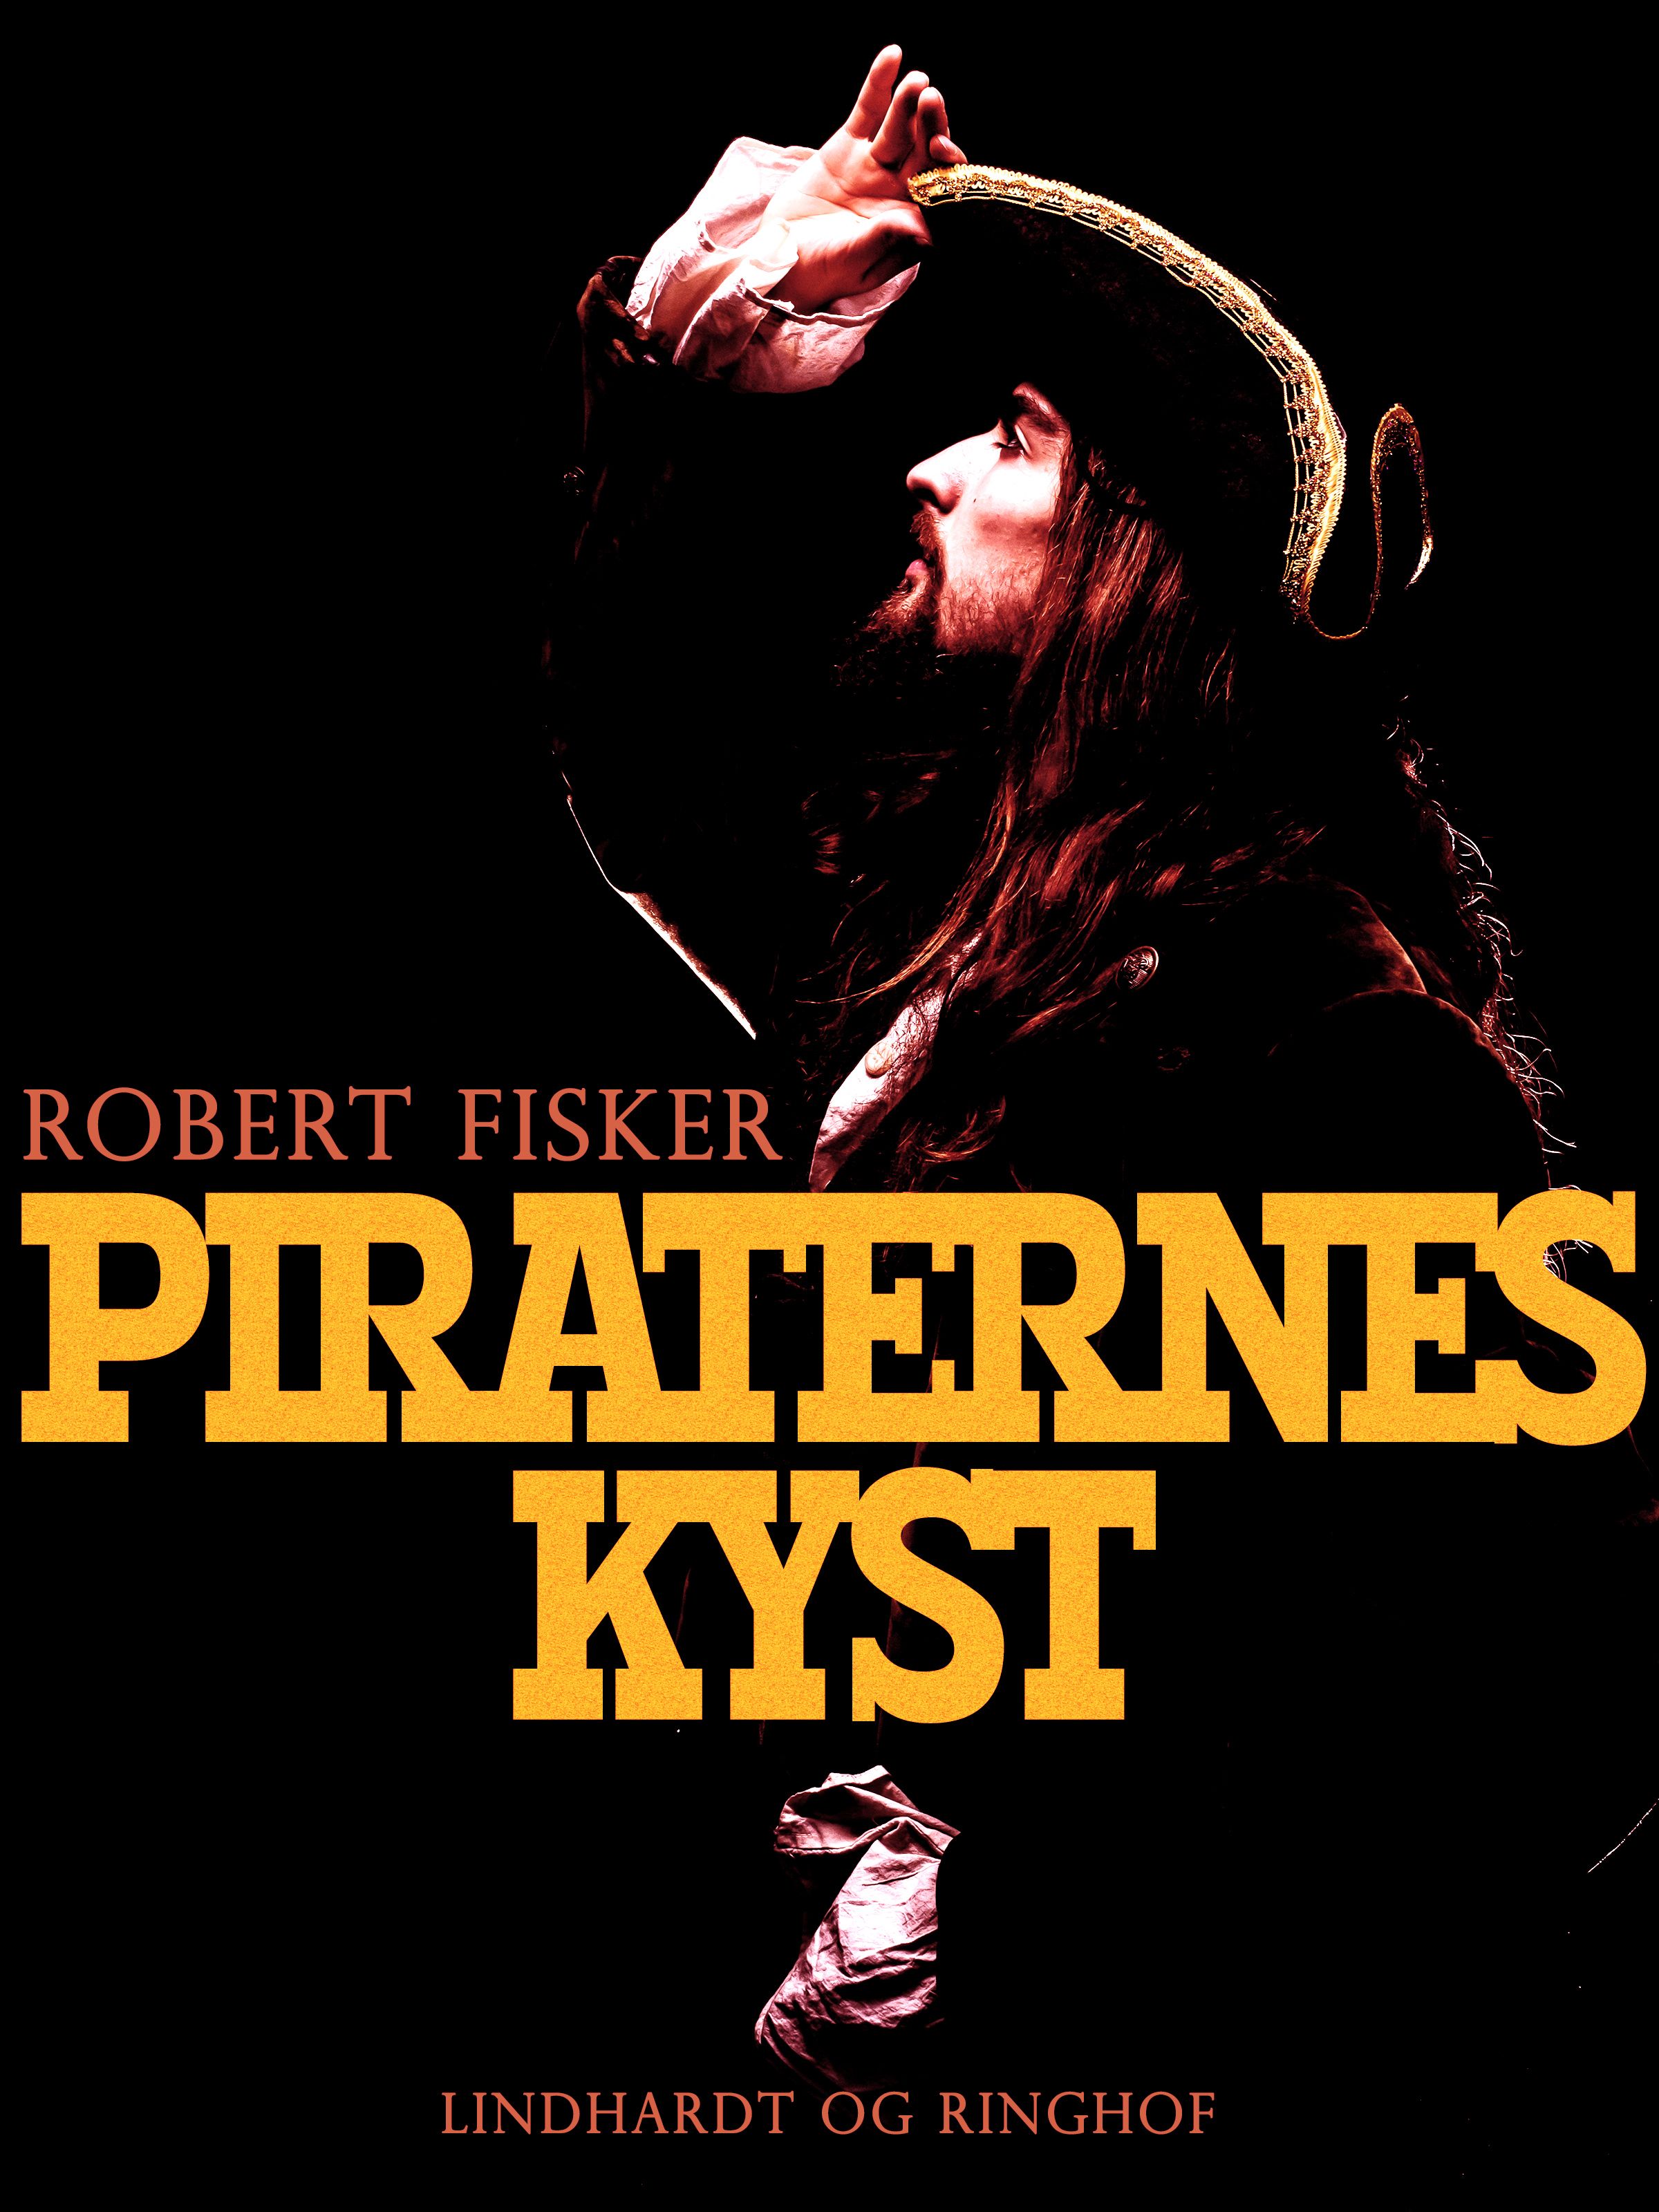 Piraternes kyst, eBook by Robert Fisker